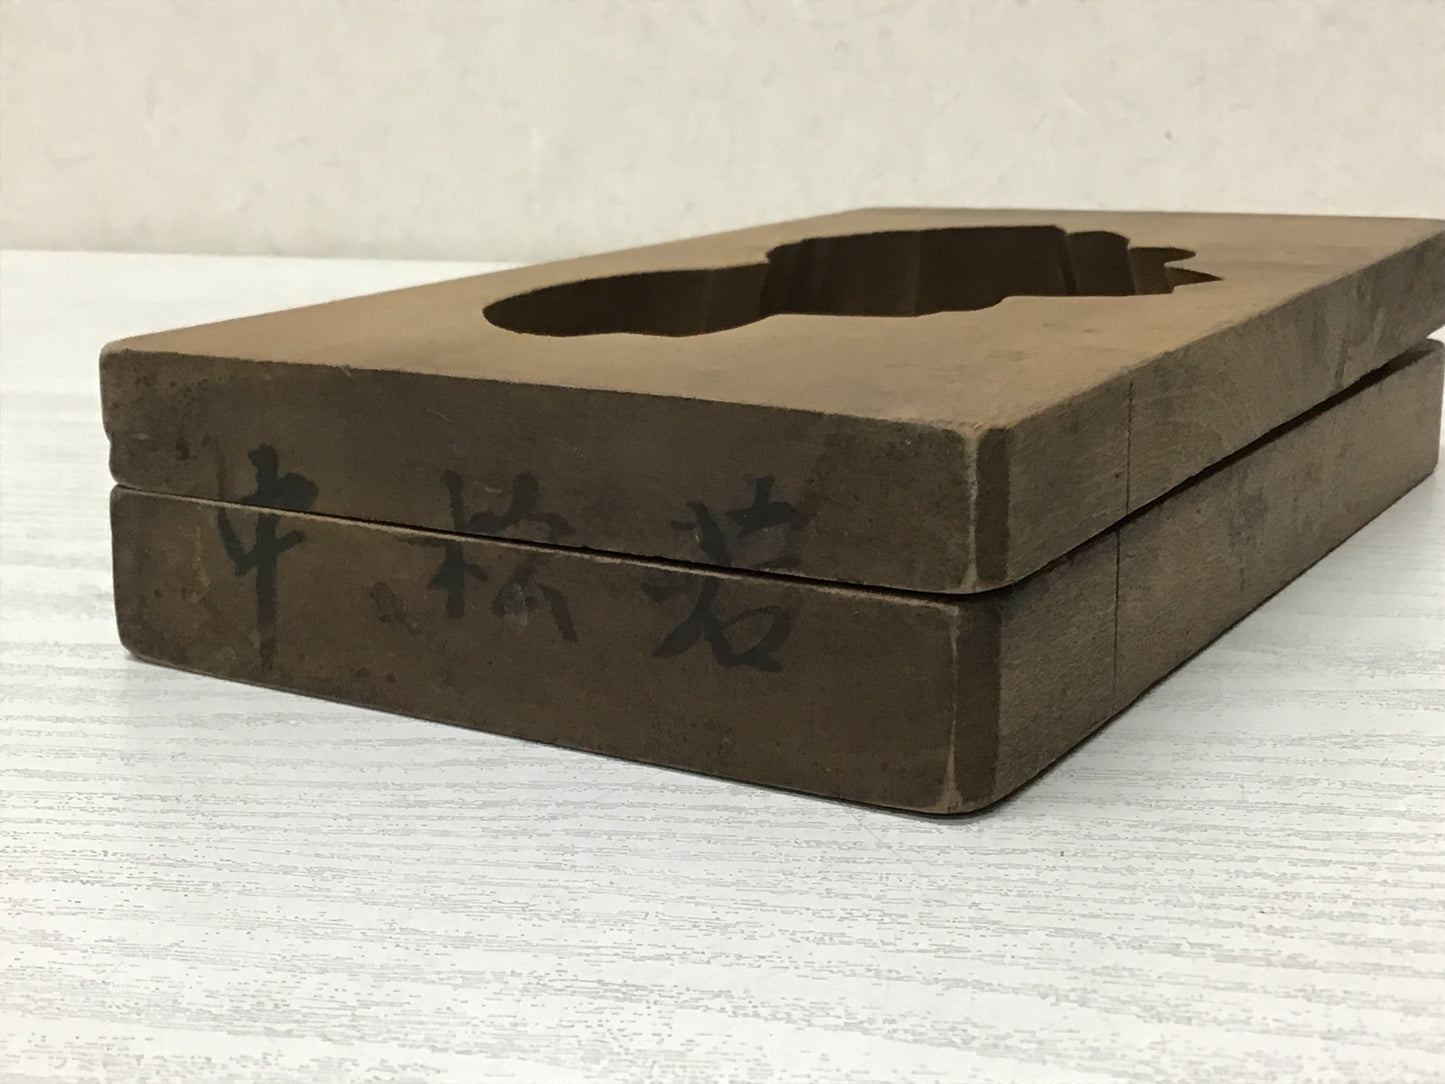 Y2556 KASHIGATA Pine pattern Japanese vintage Wooden Pastry Mold wagashi